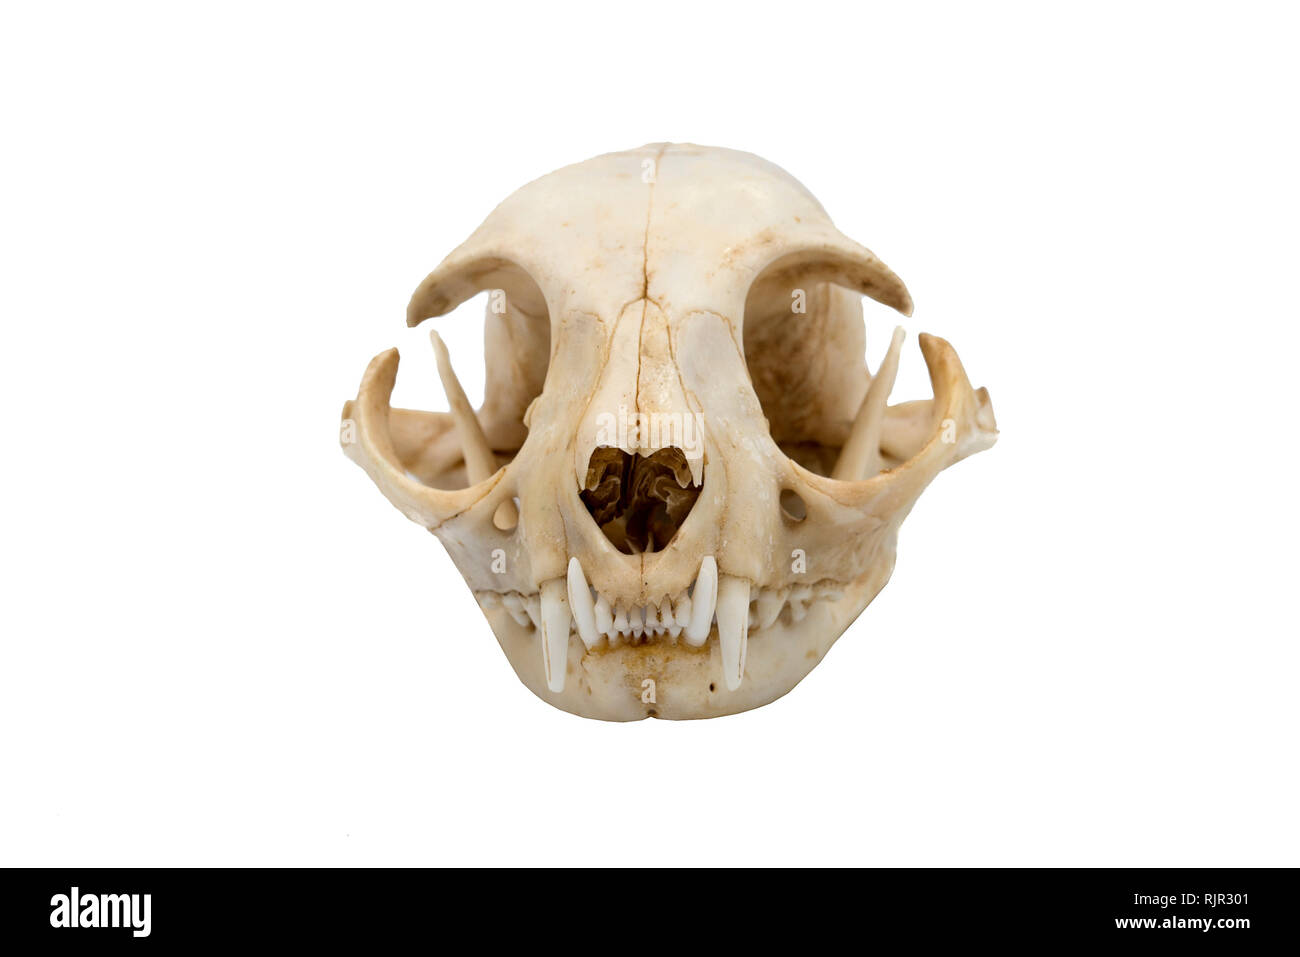 European wildcat (Felis silvestris), mammalian skull Stock Photo